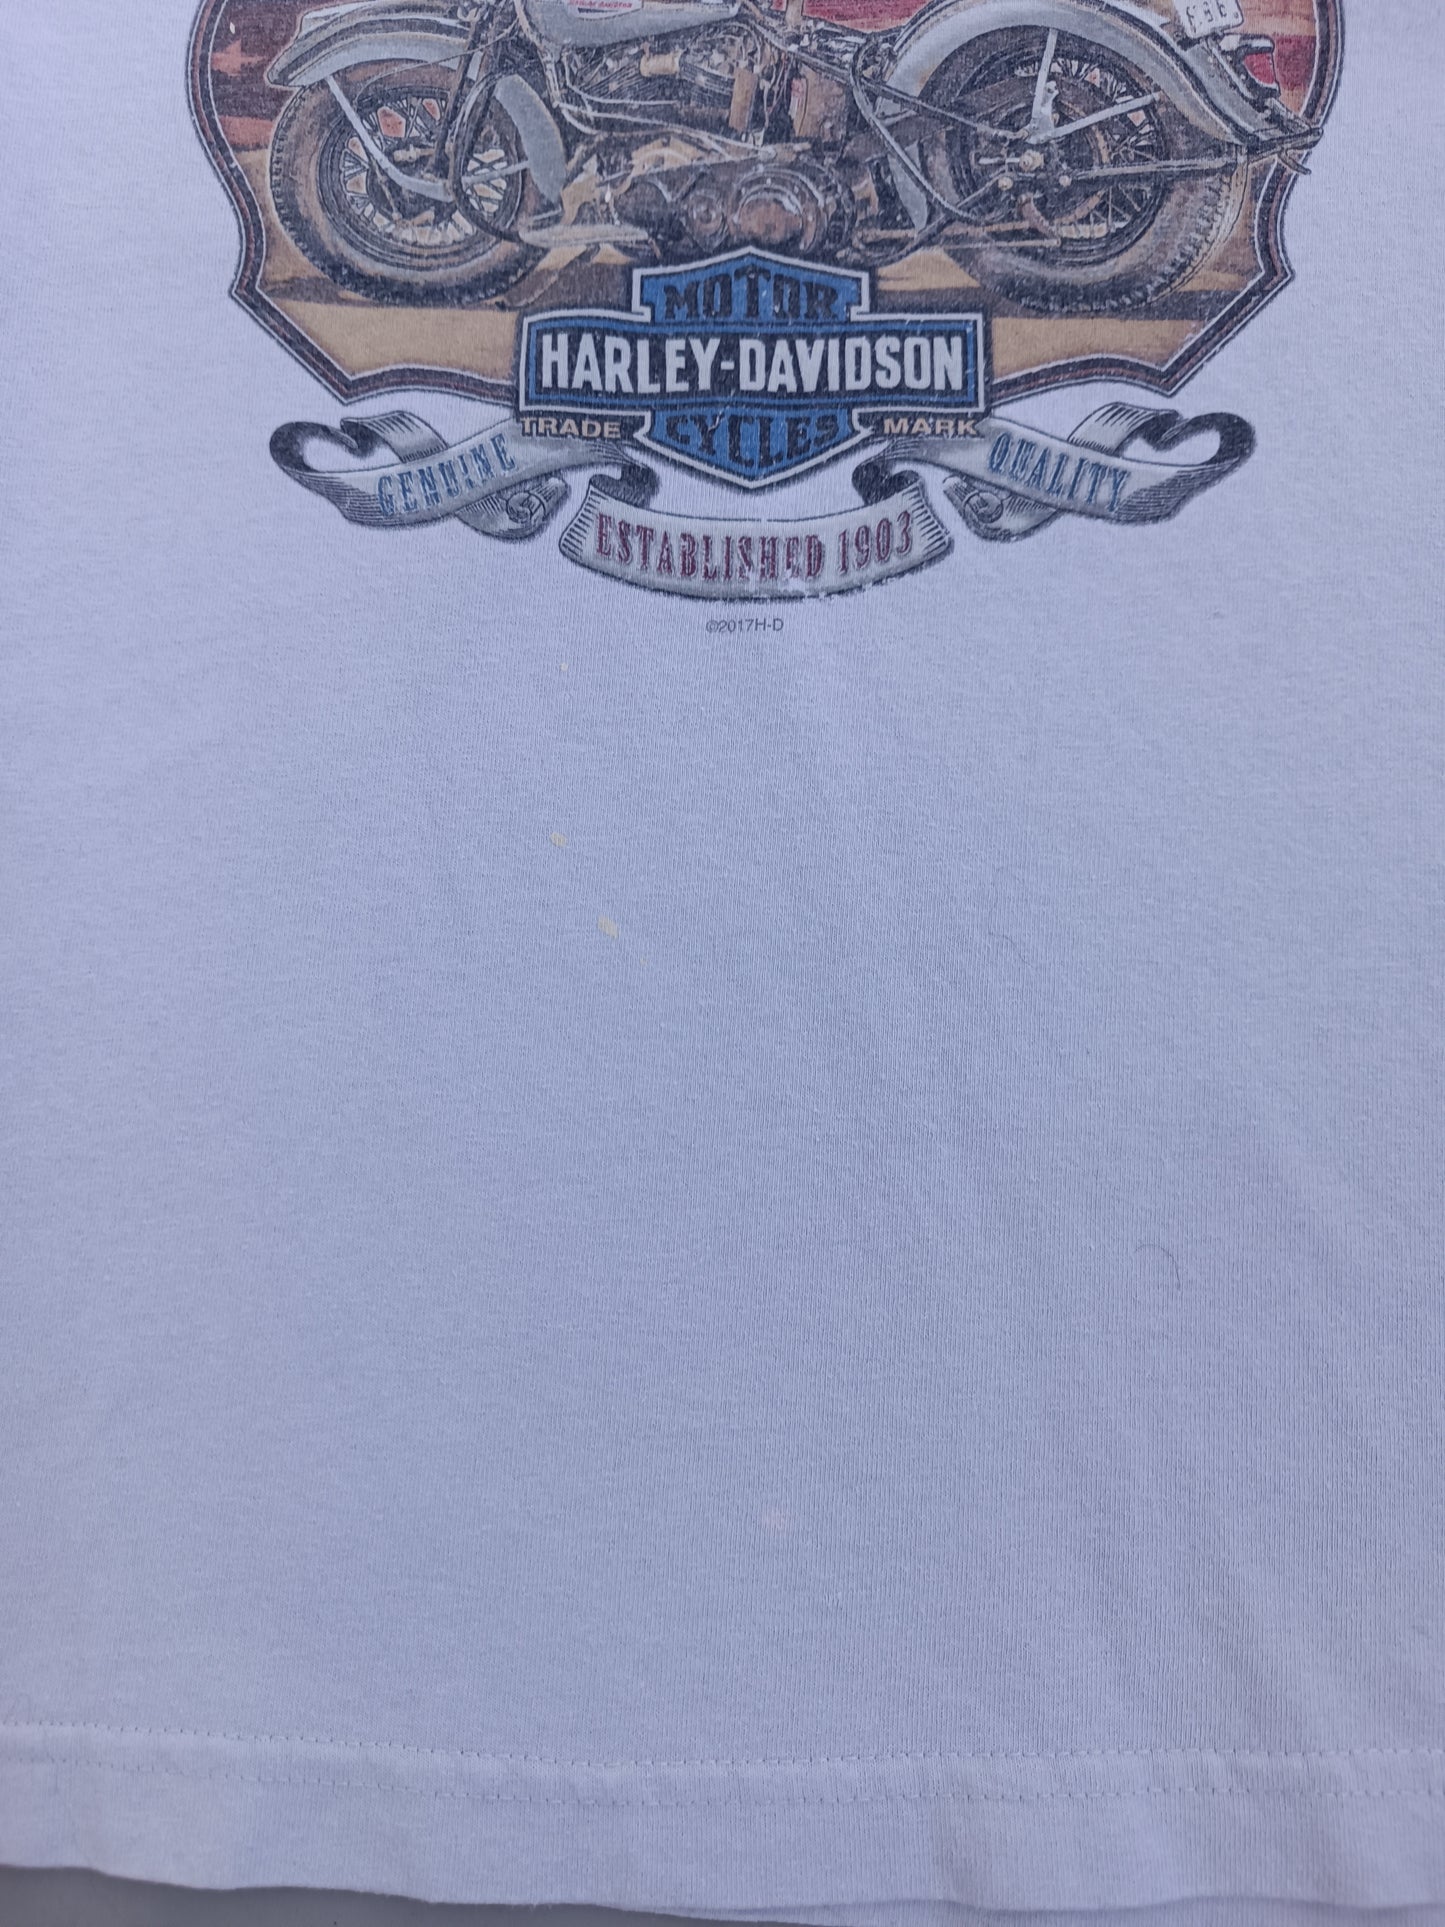 Harley Davidson American Spirit - S